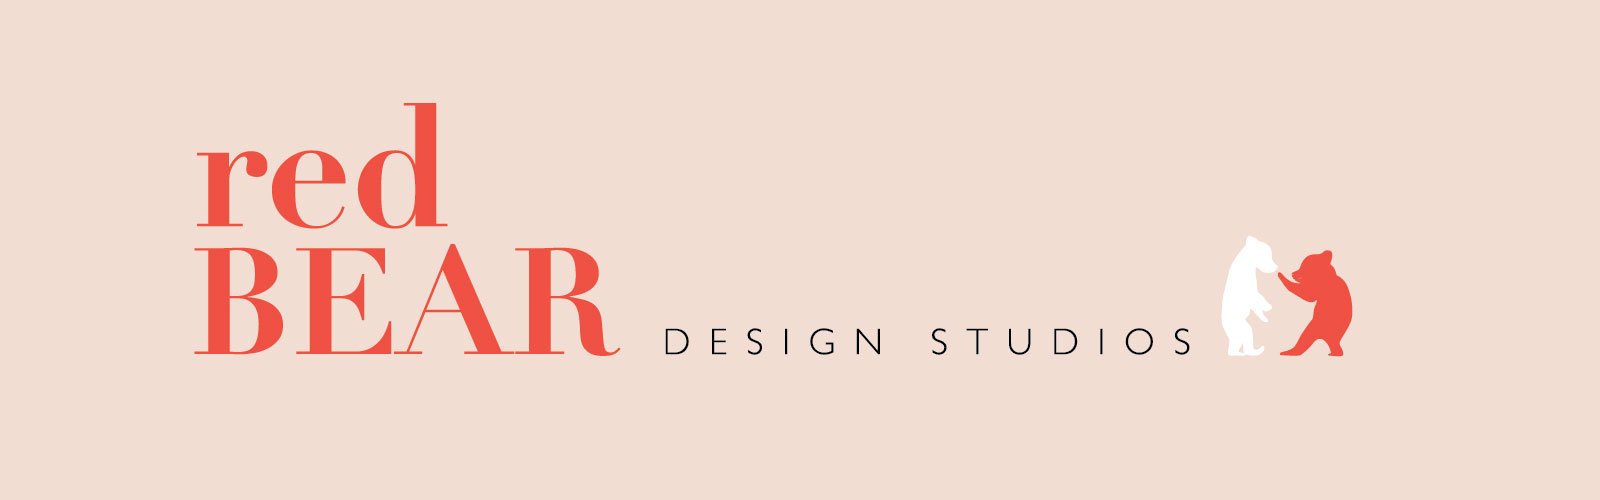 Red Bear Design Studio Hero Banner Mobile_Artboard 2